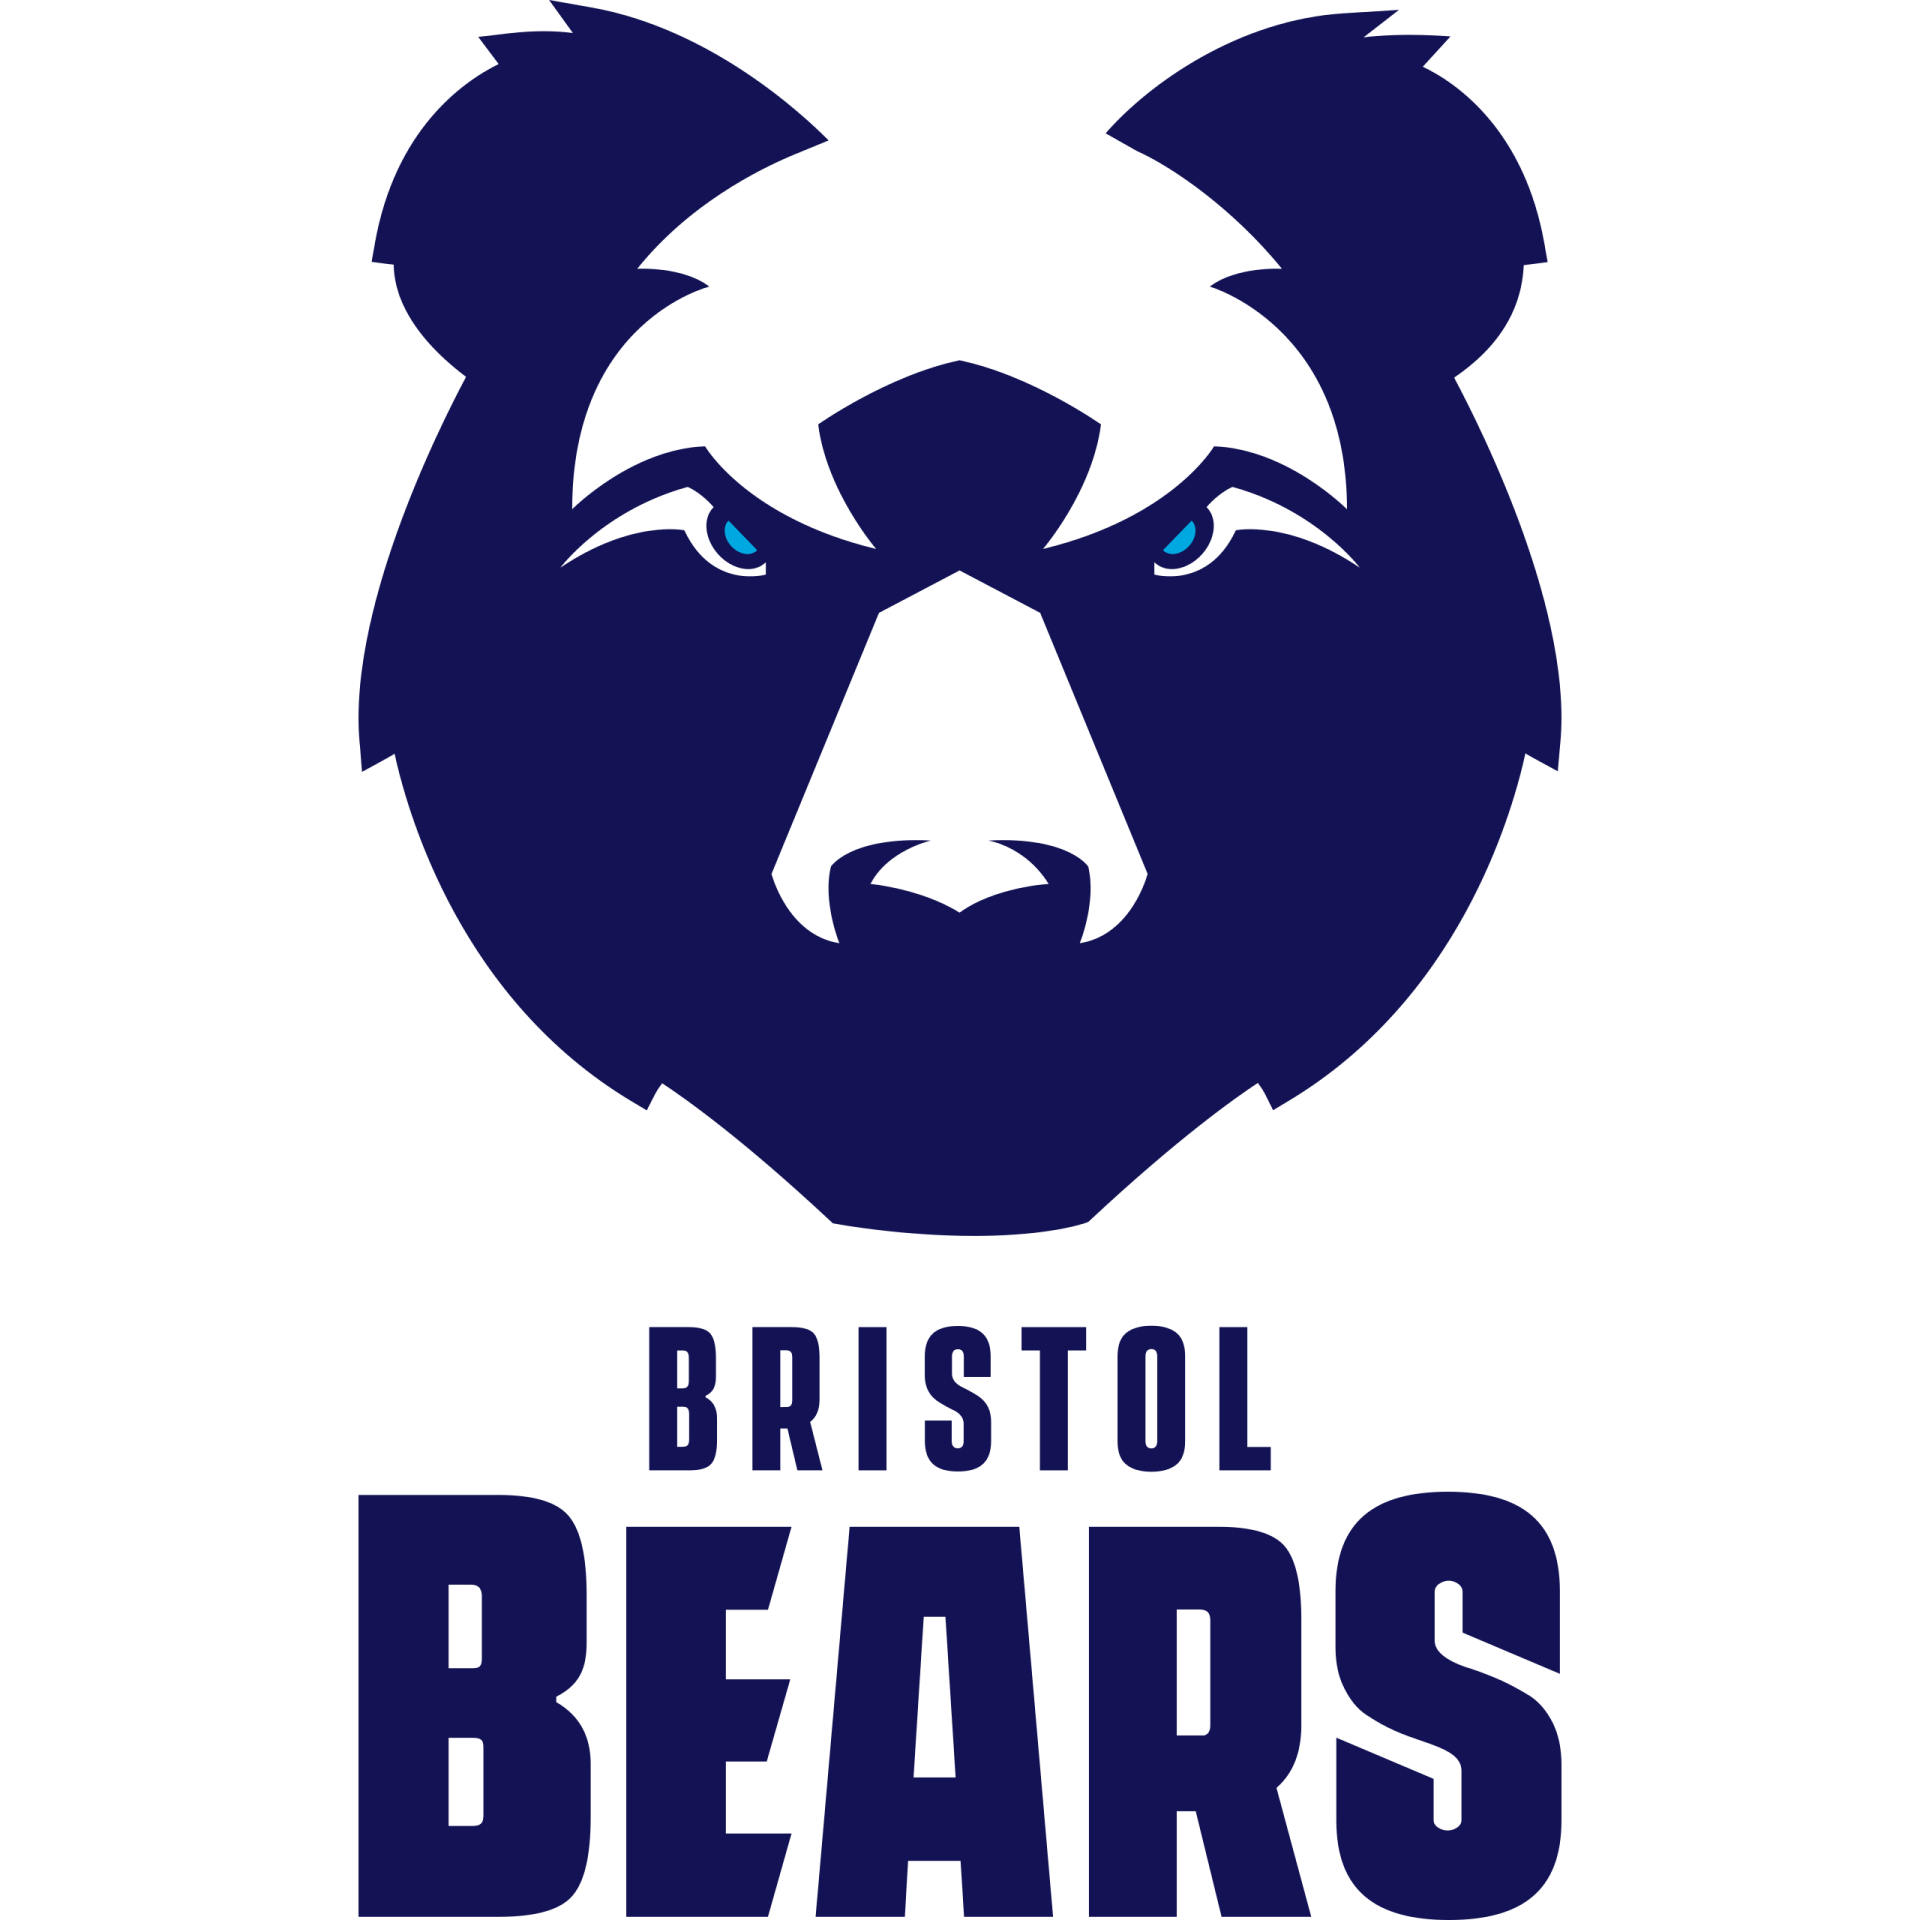 Bristol bears